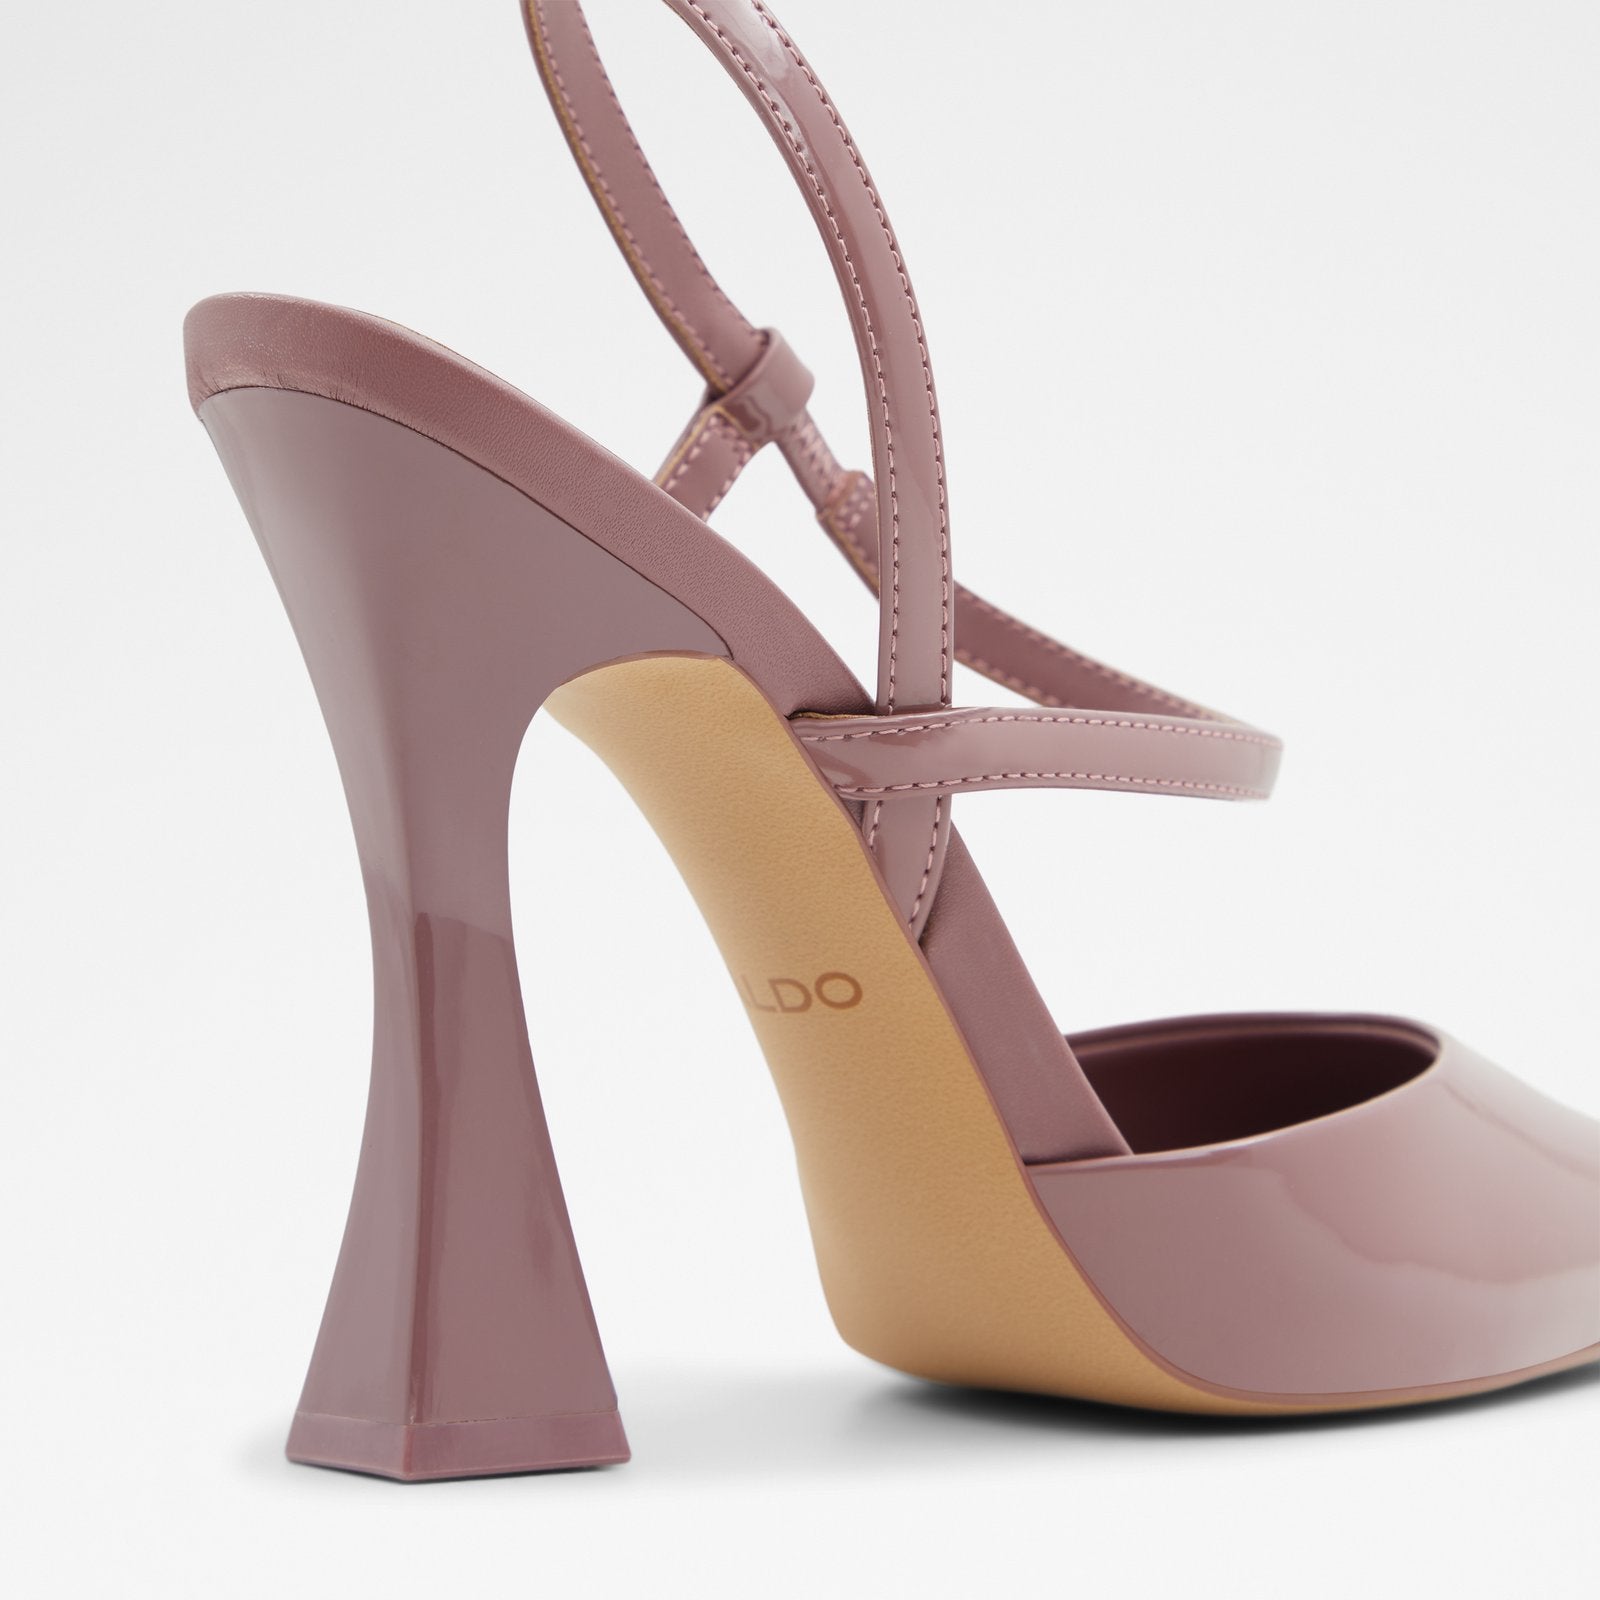 Zaha Women Shoes - Medium Pink - ALDO KSA